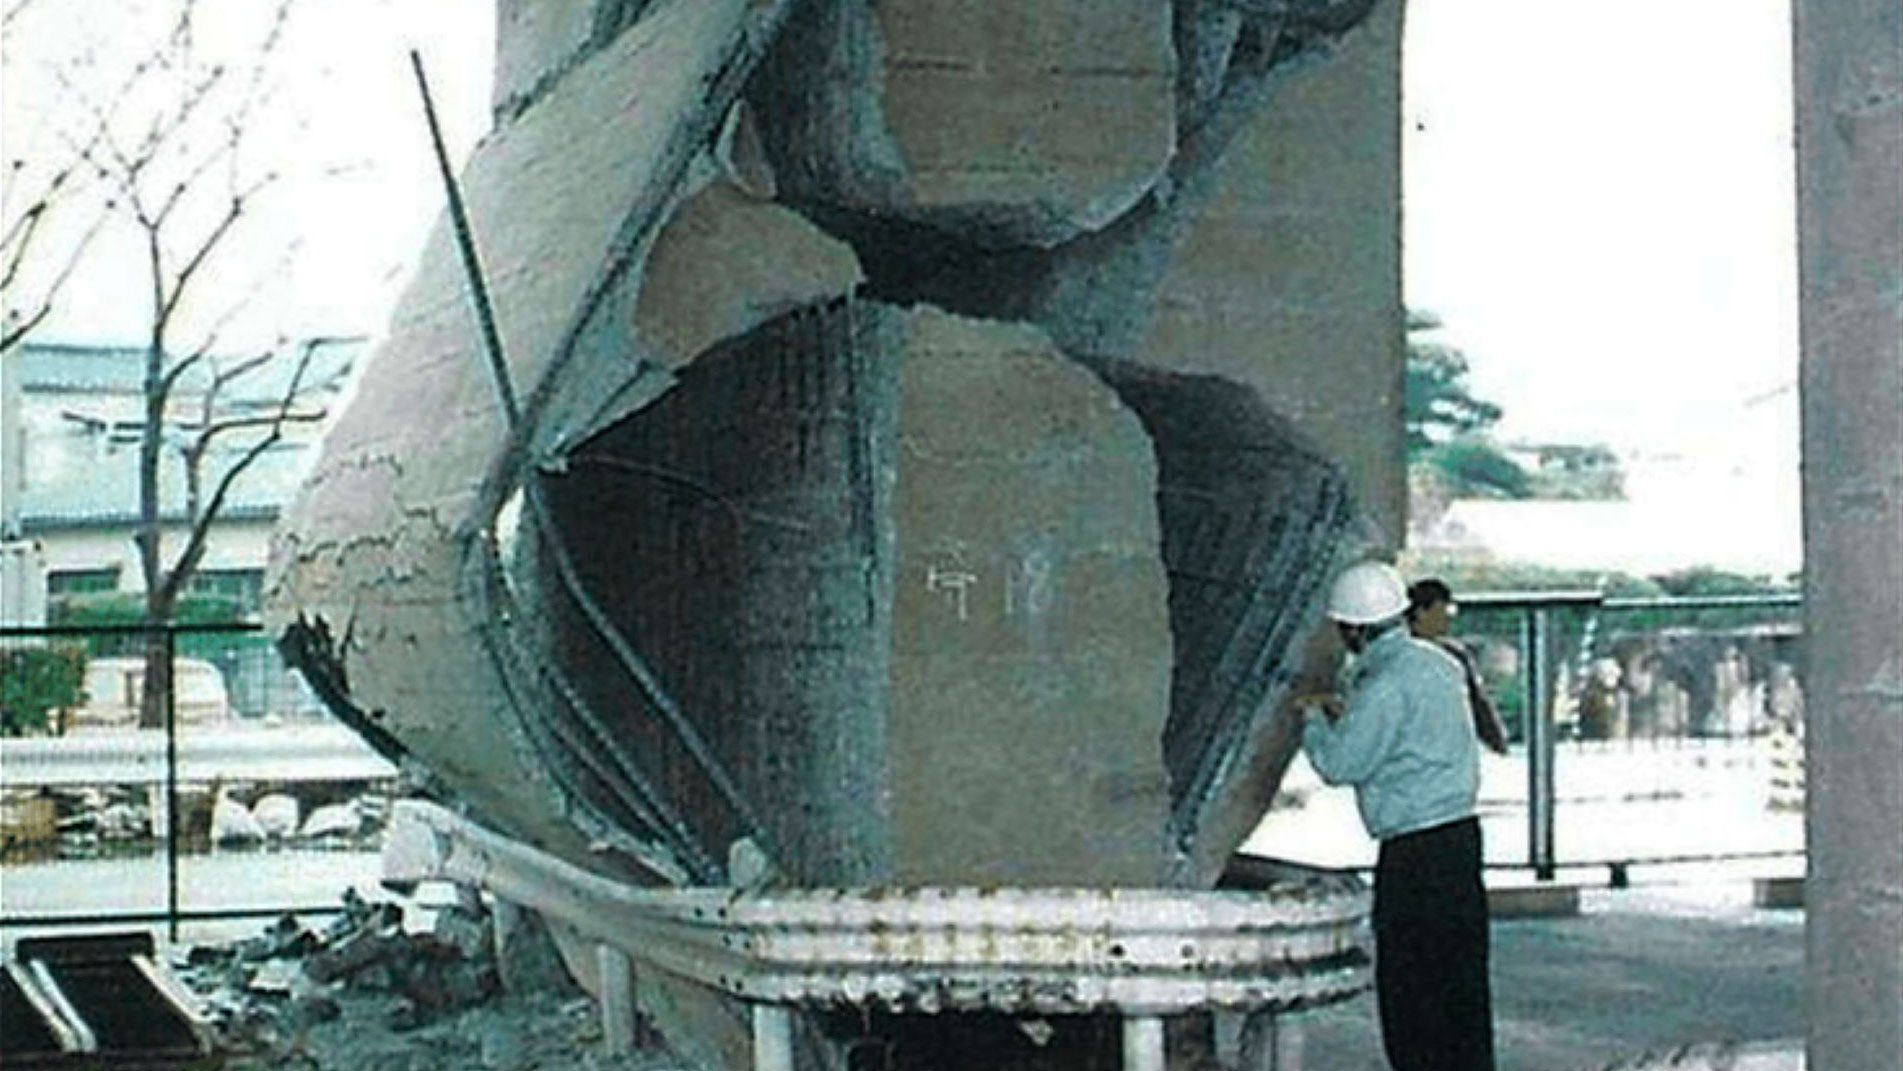 Failures in reinforced concrete columns